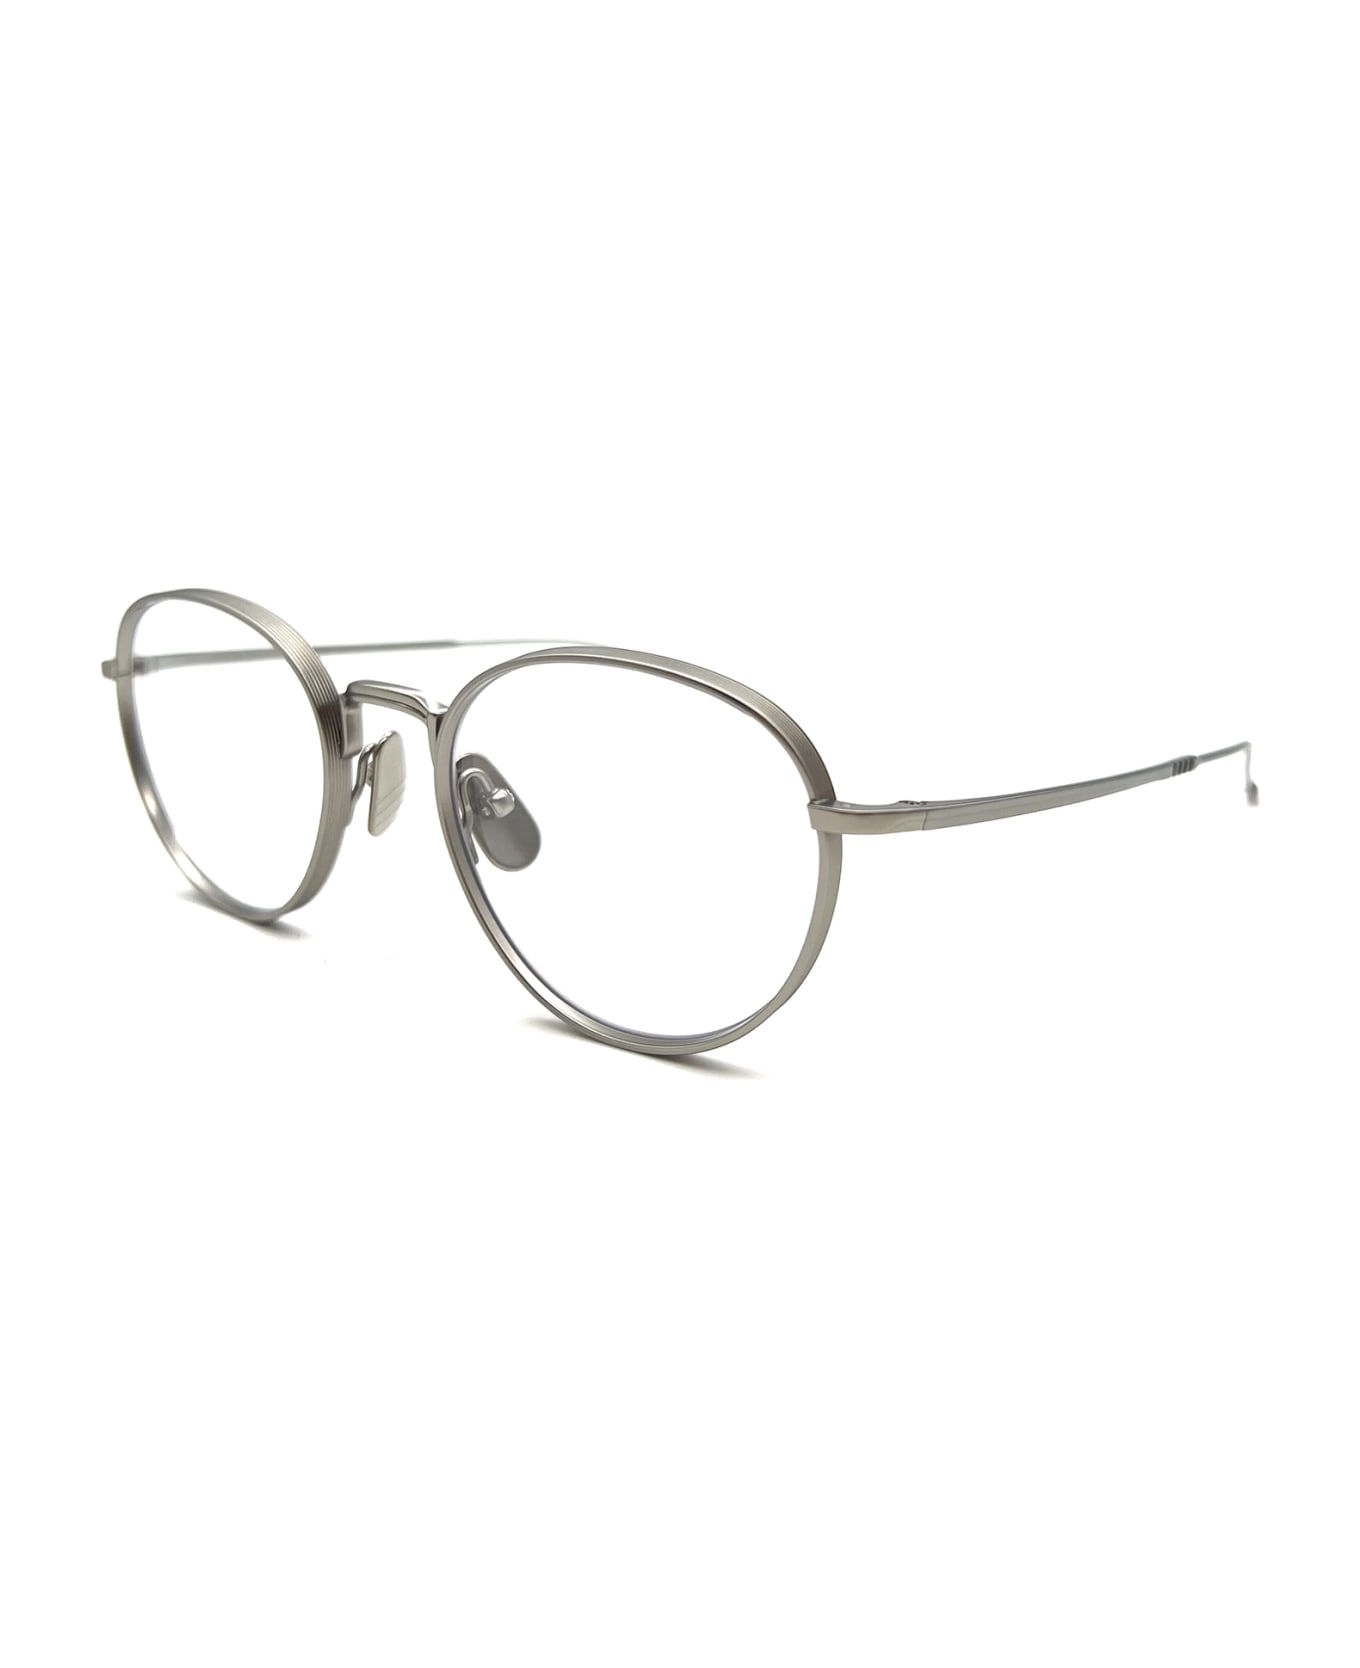 Thom Browne Ueo119a-g0001-035-52 Glasses - 035 SILVER アイウェア